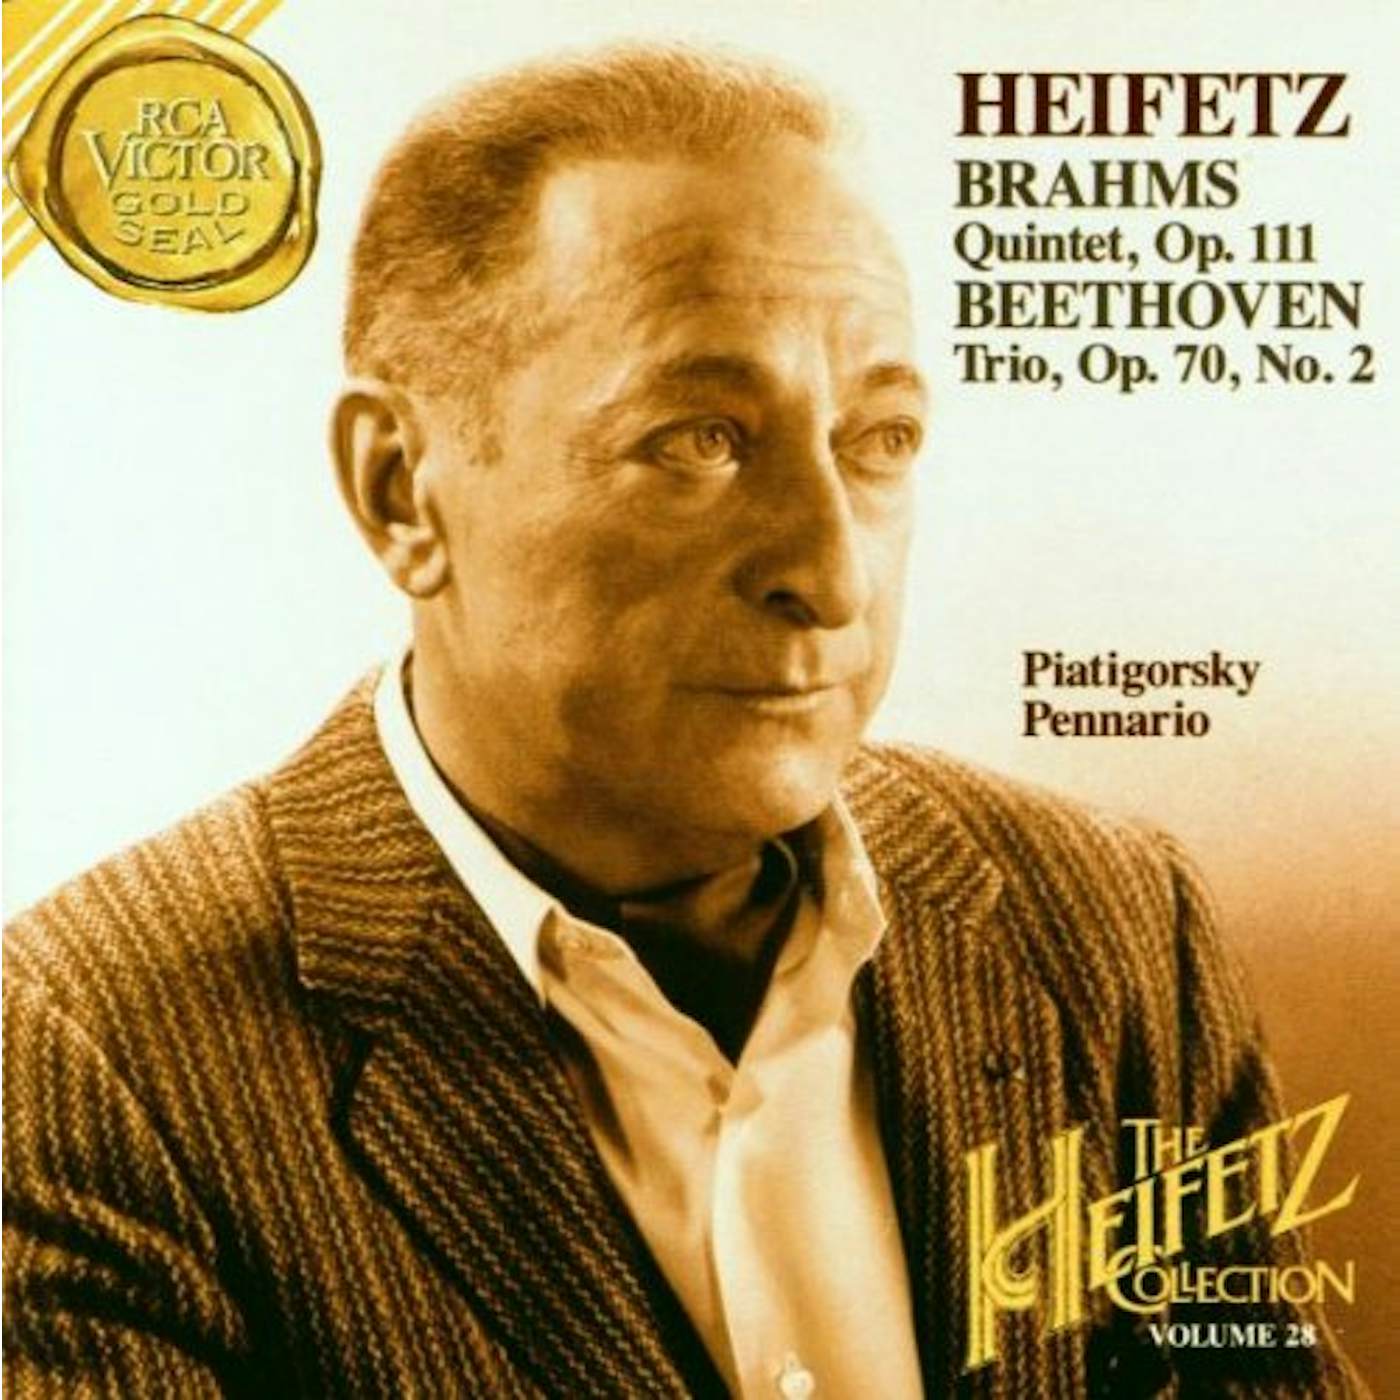 Jascha Heifetz COLLECTION VOL 28 CD